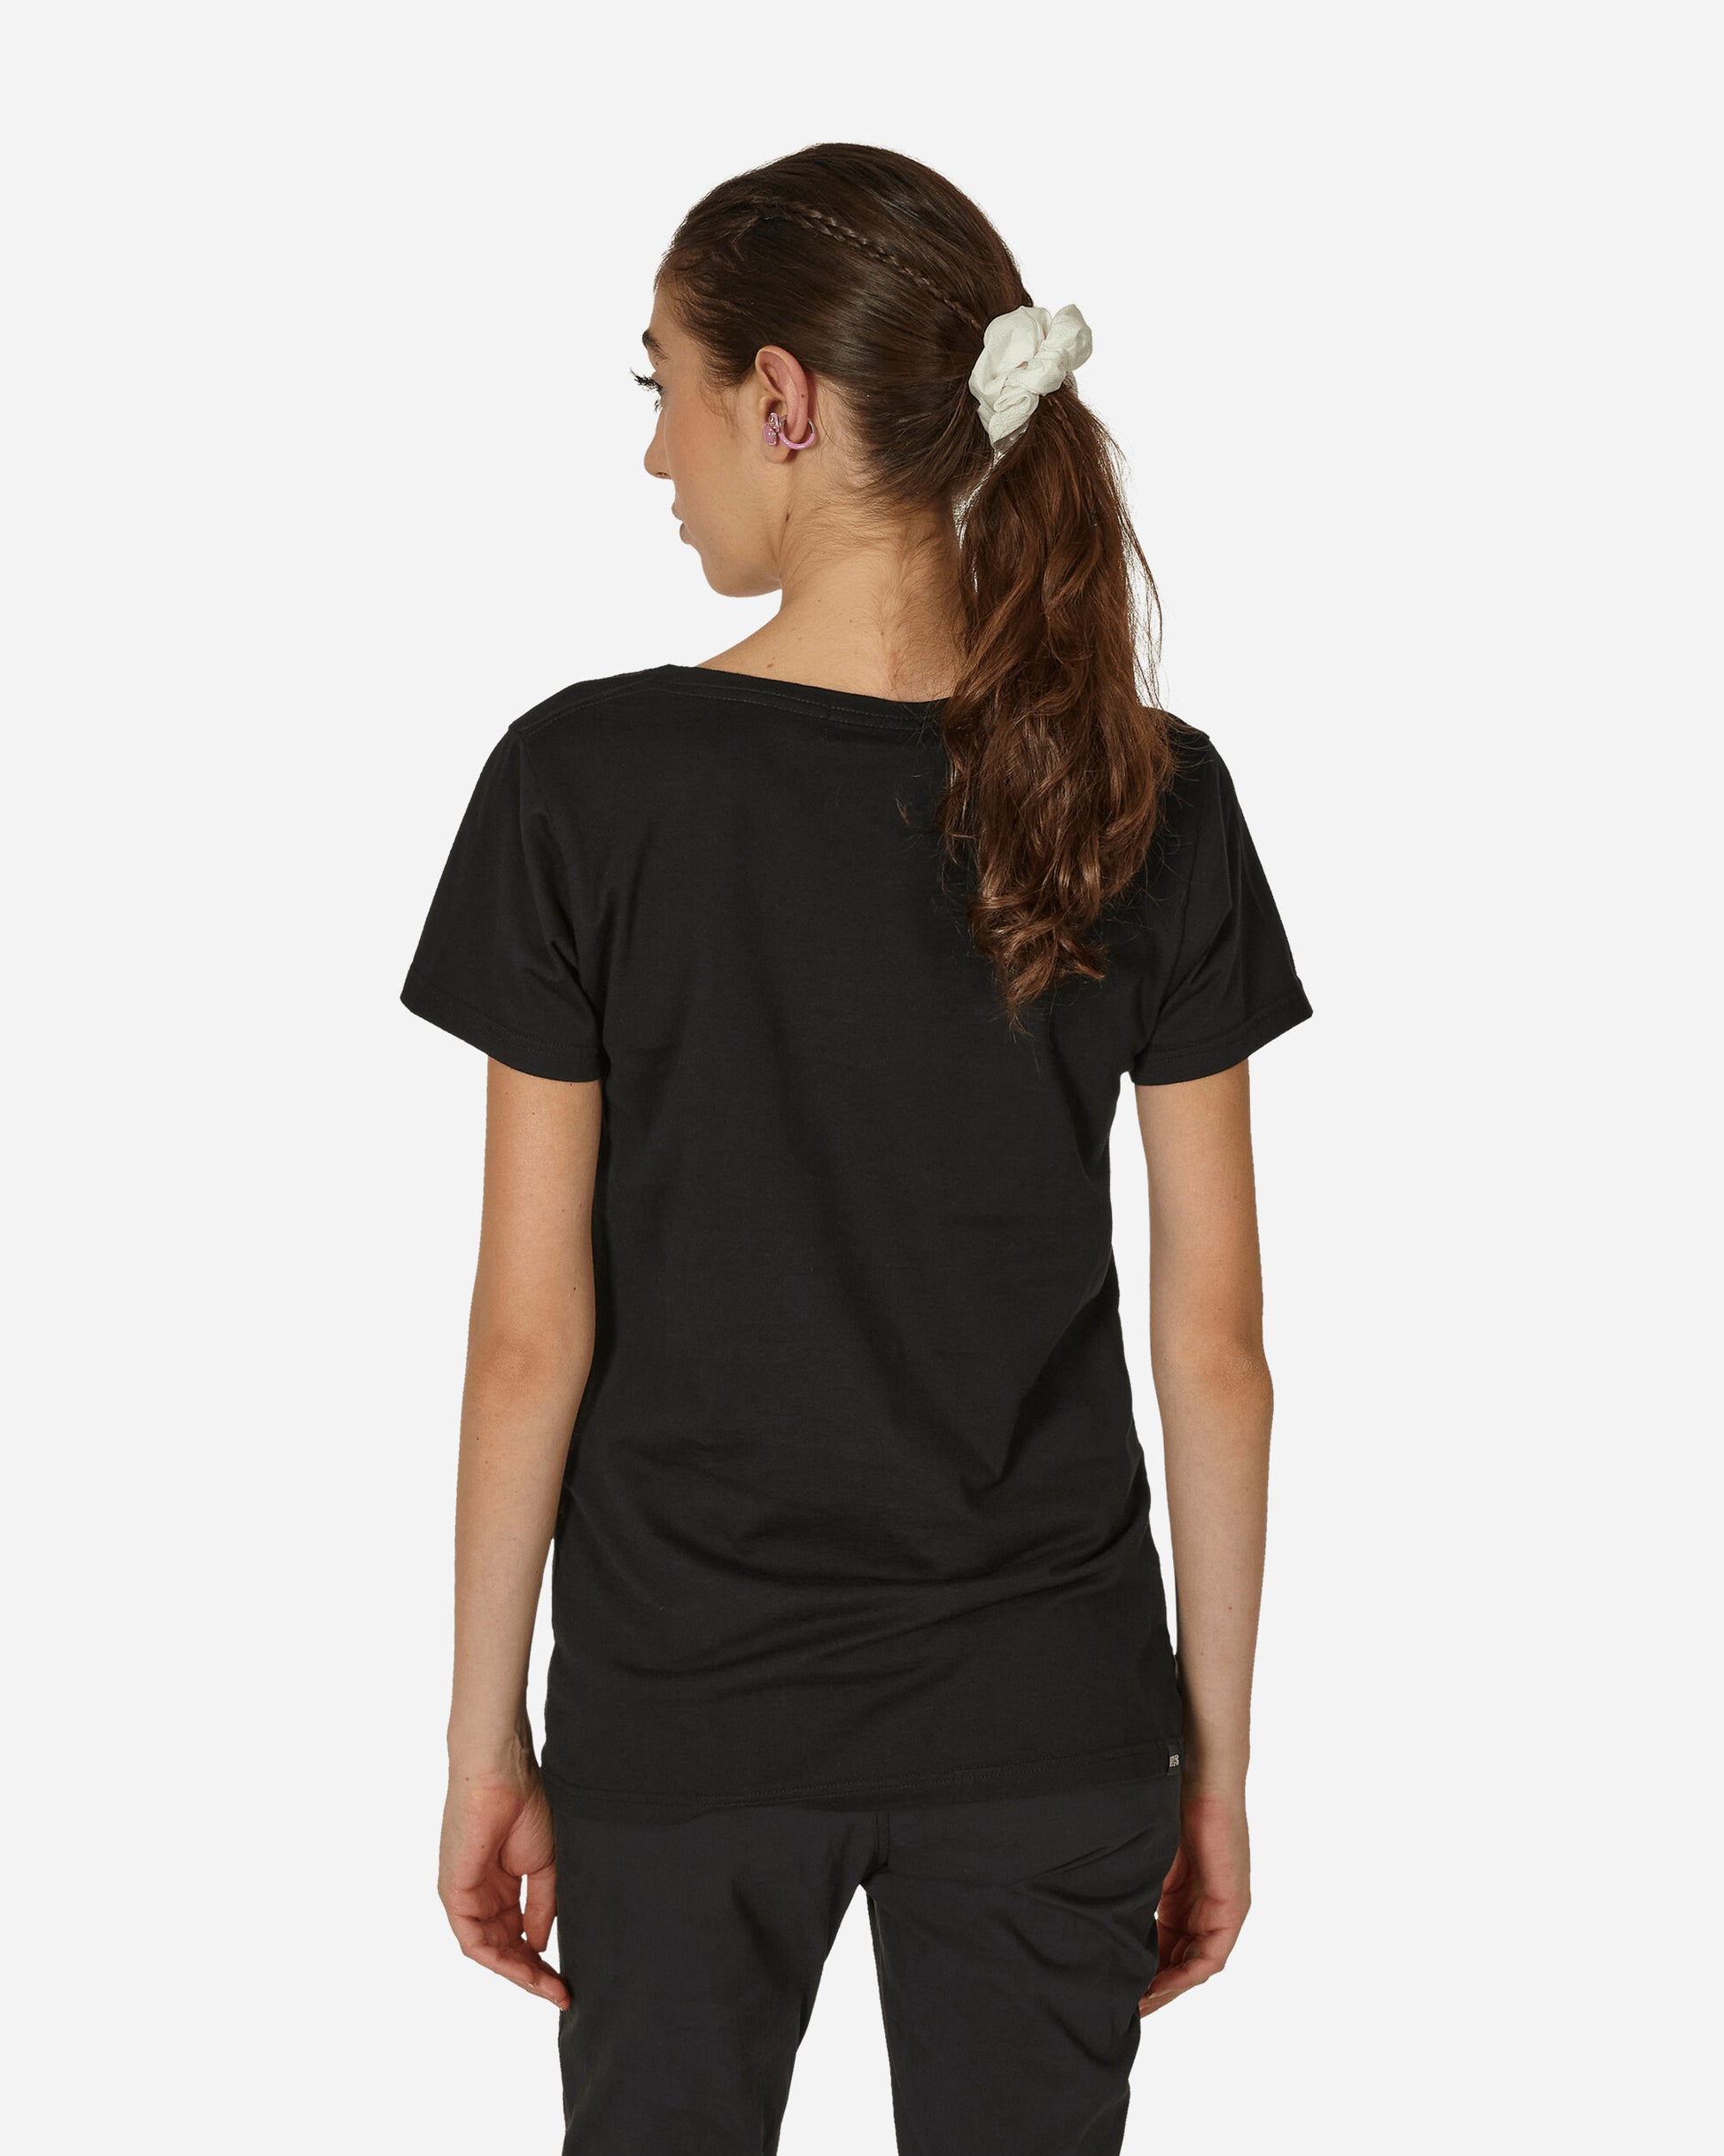 Hysteric Glamour Wmns Black Cat Girl T-Shirt Black T-Shirts Shortsleeve 01233CT019 BLACK